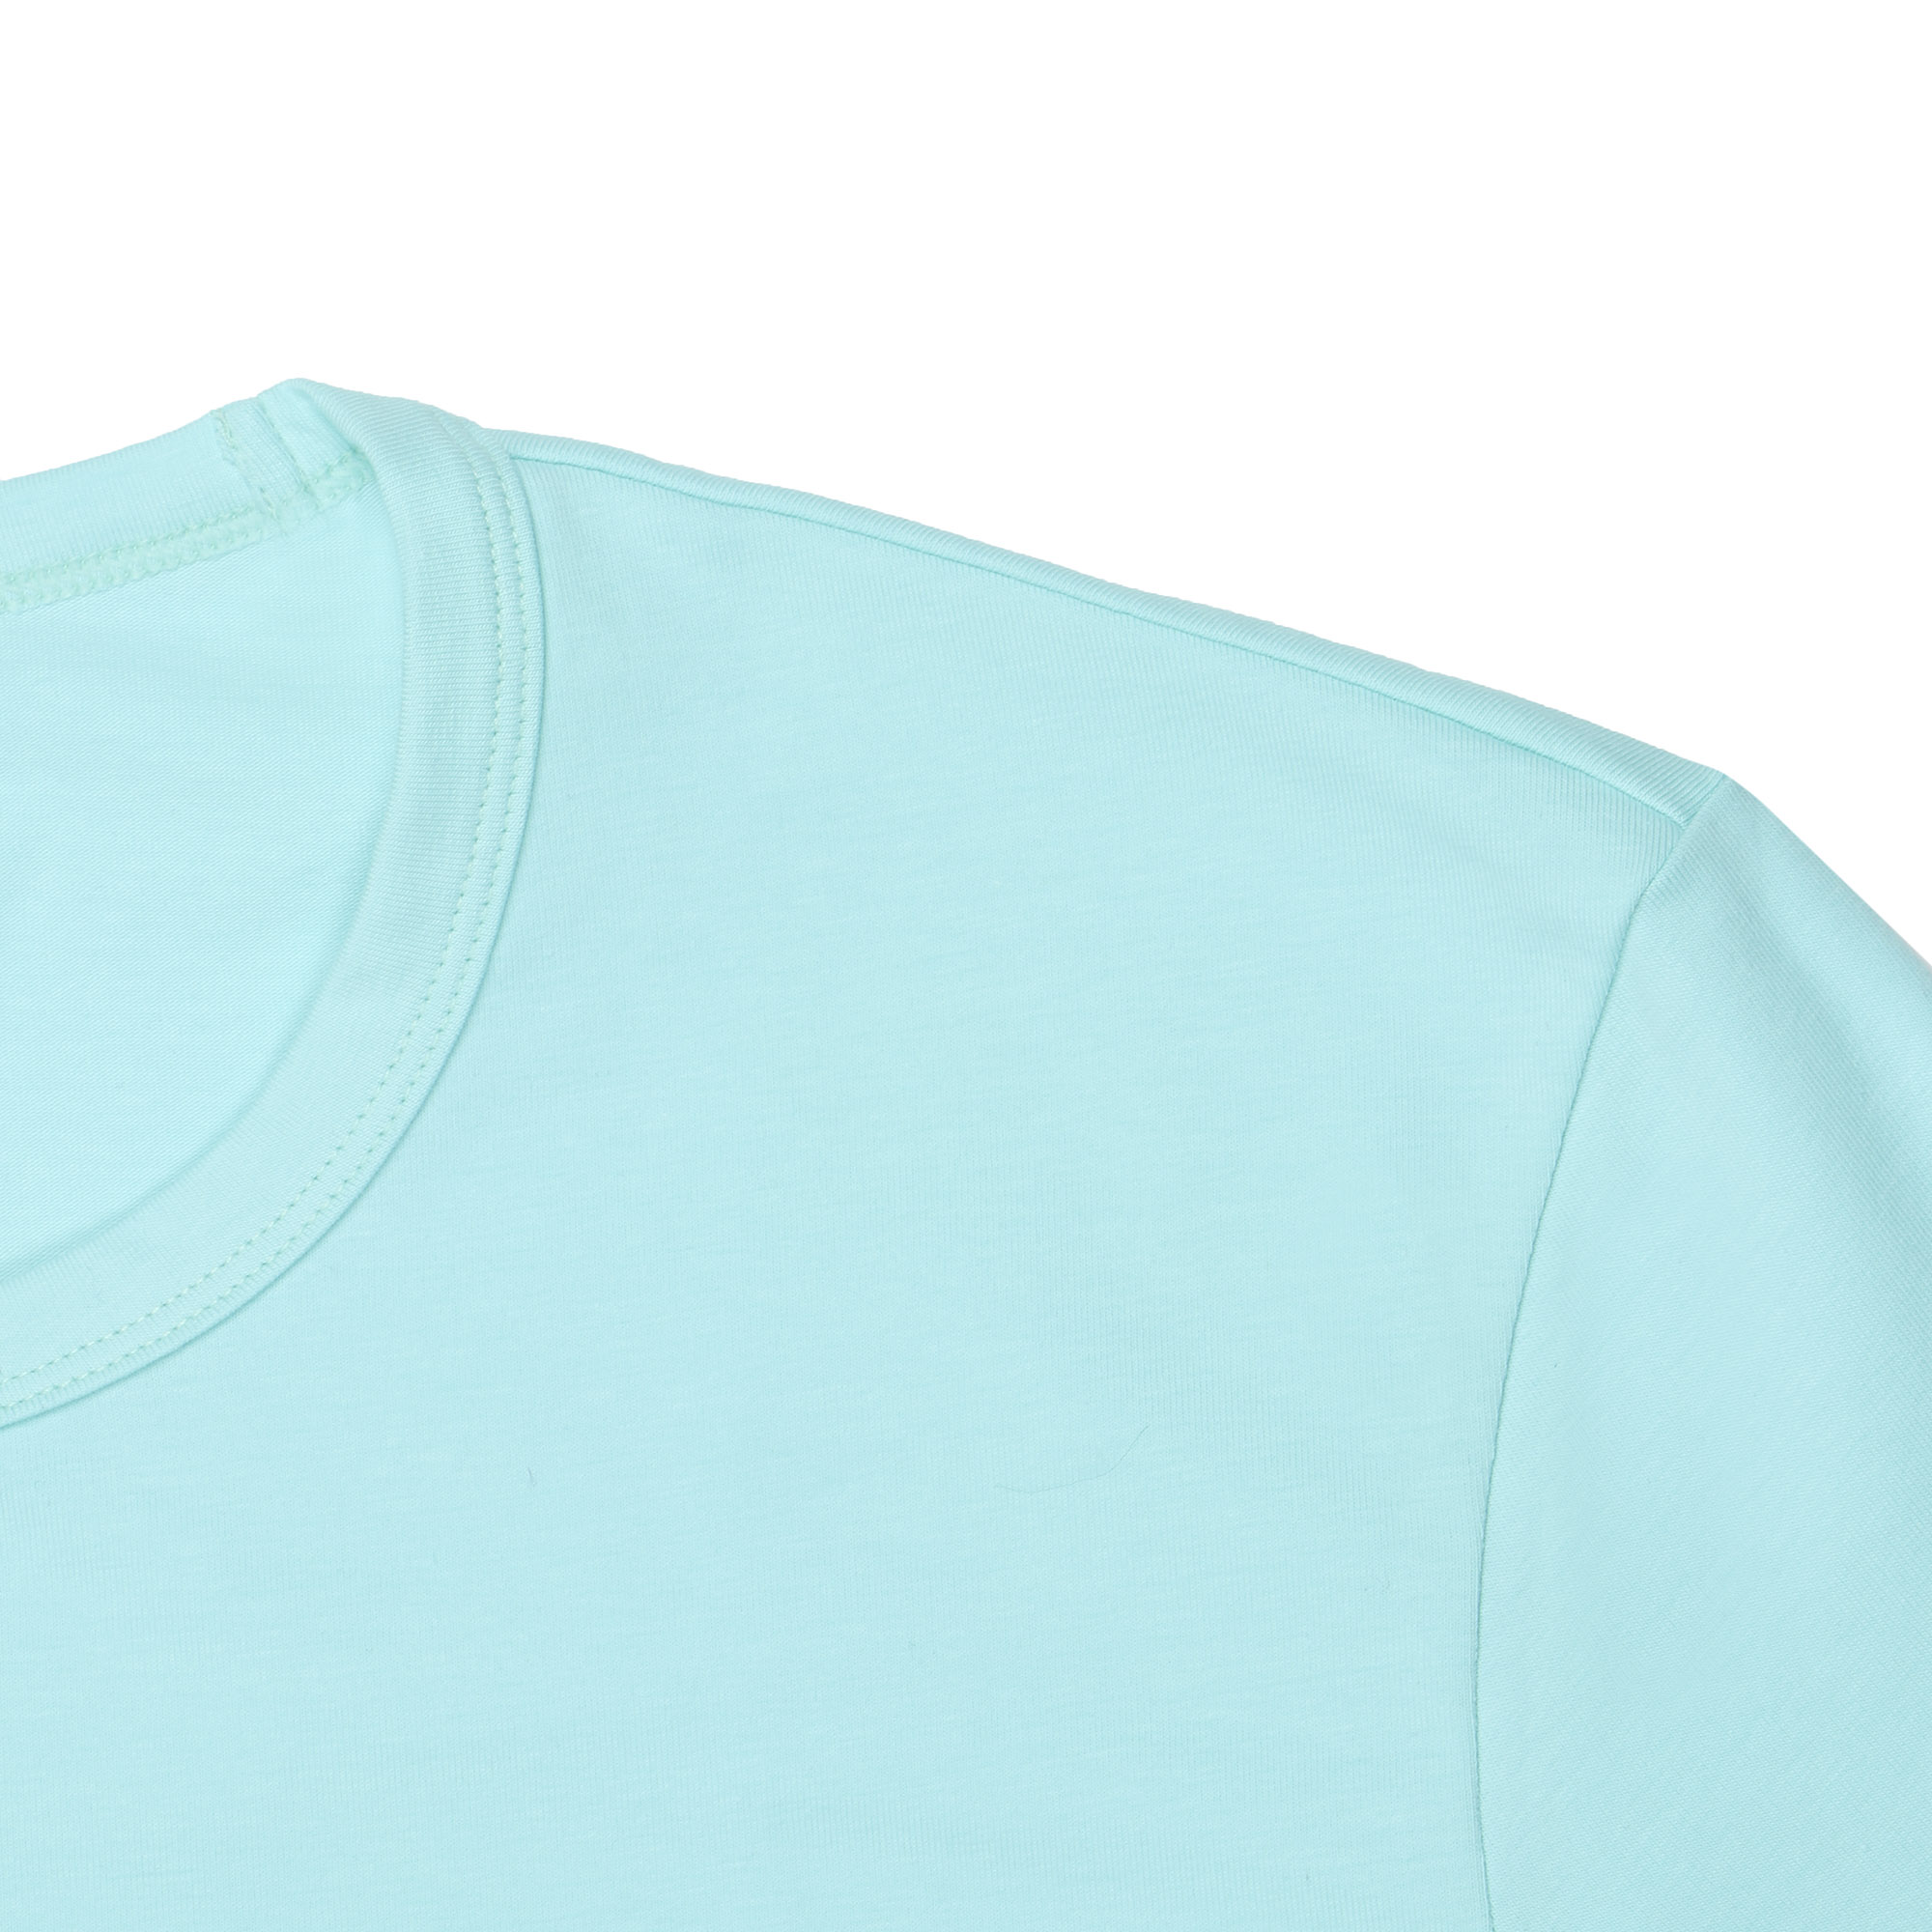 Мужская футболка Pantelemone MF-914 50 ментоловая, цвет ментоловый, размер 50 - фото 2